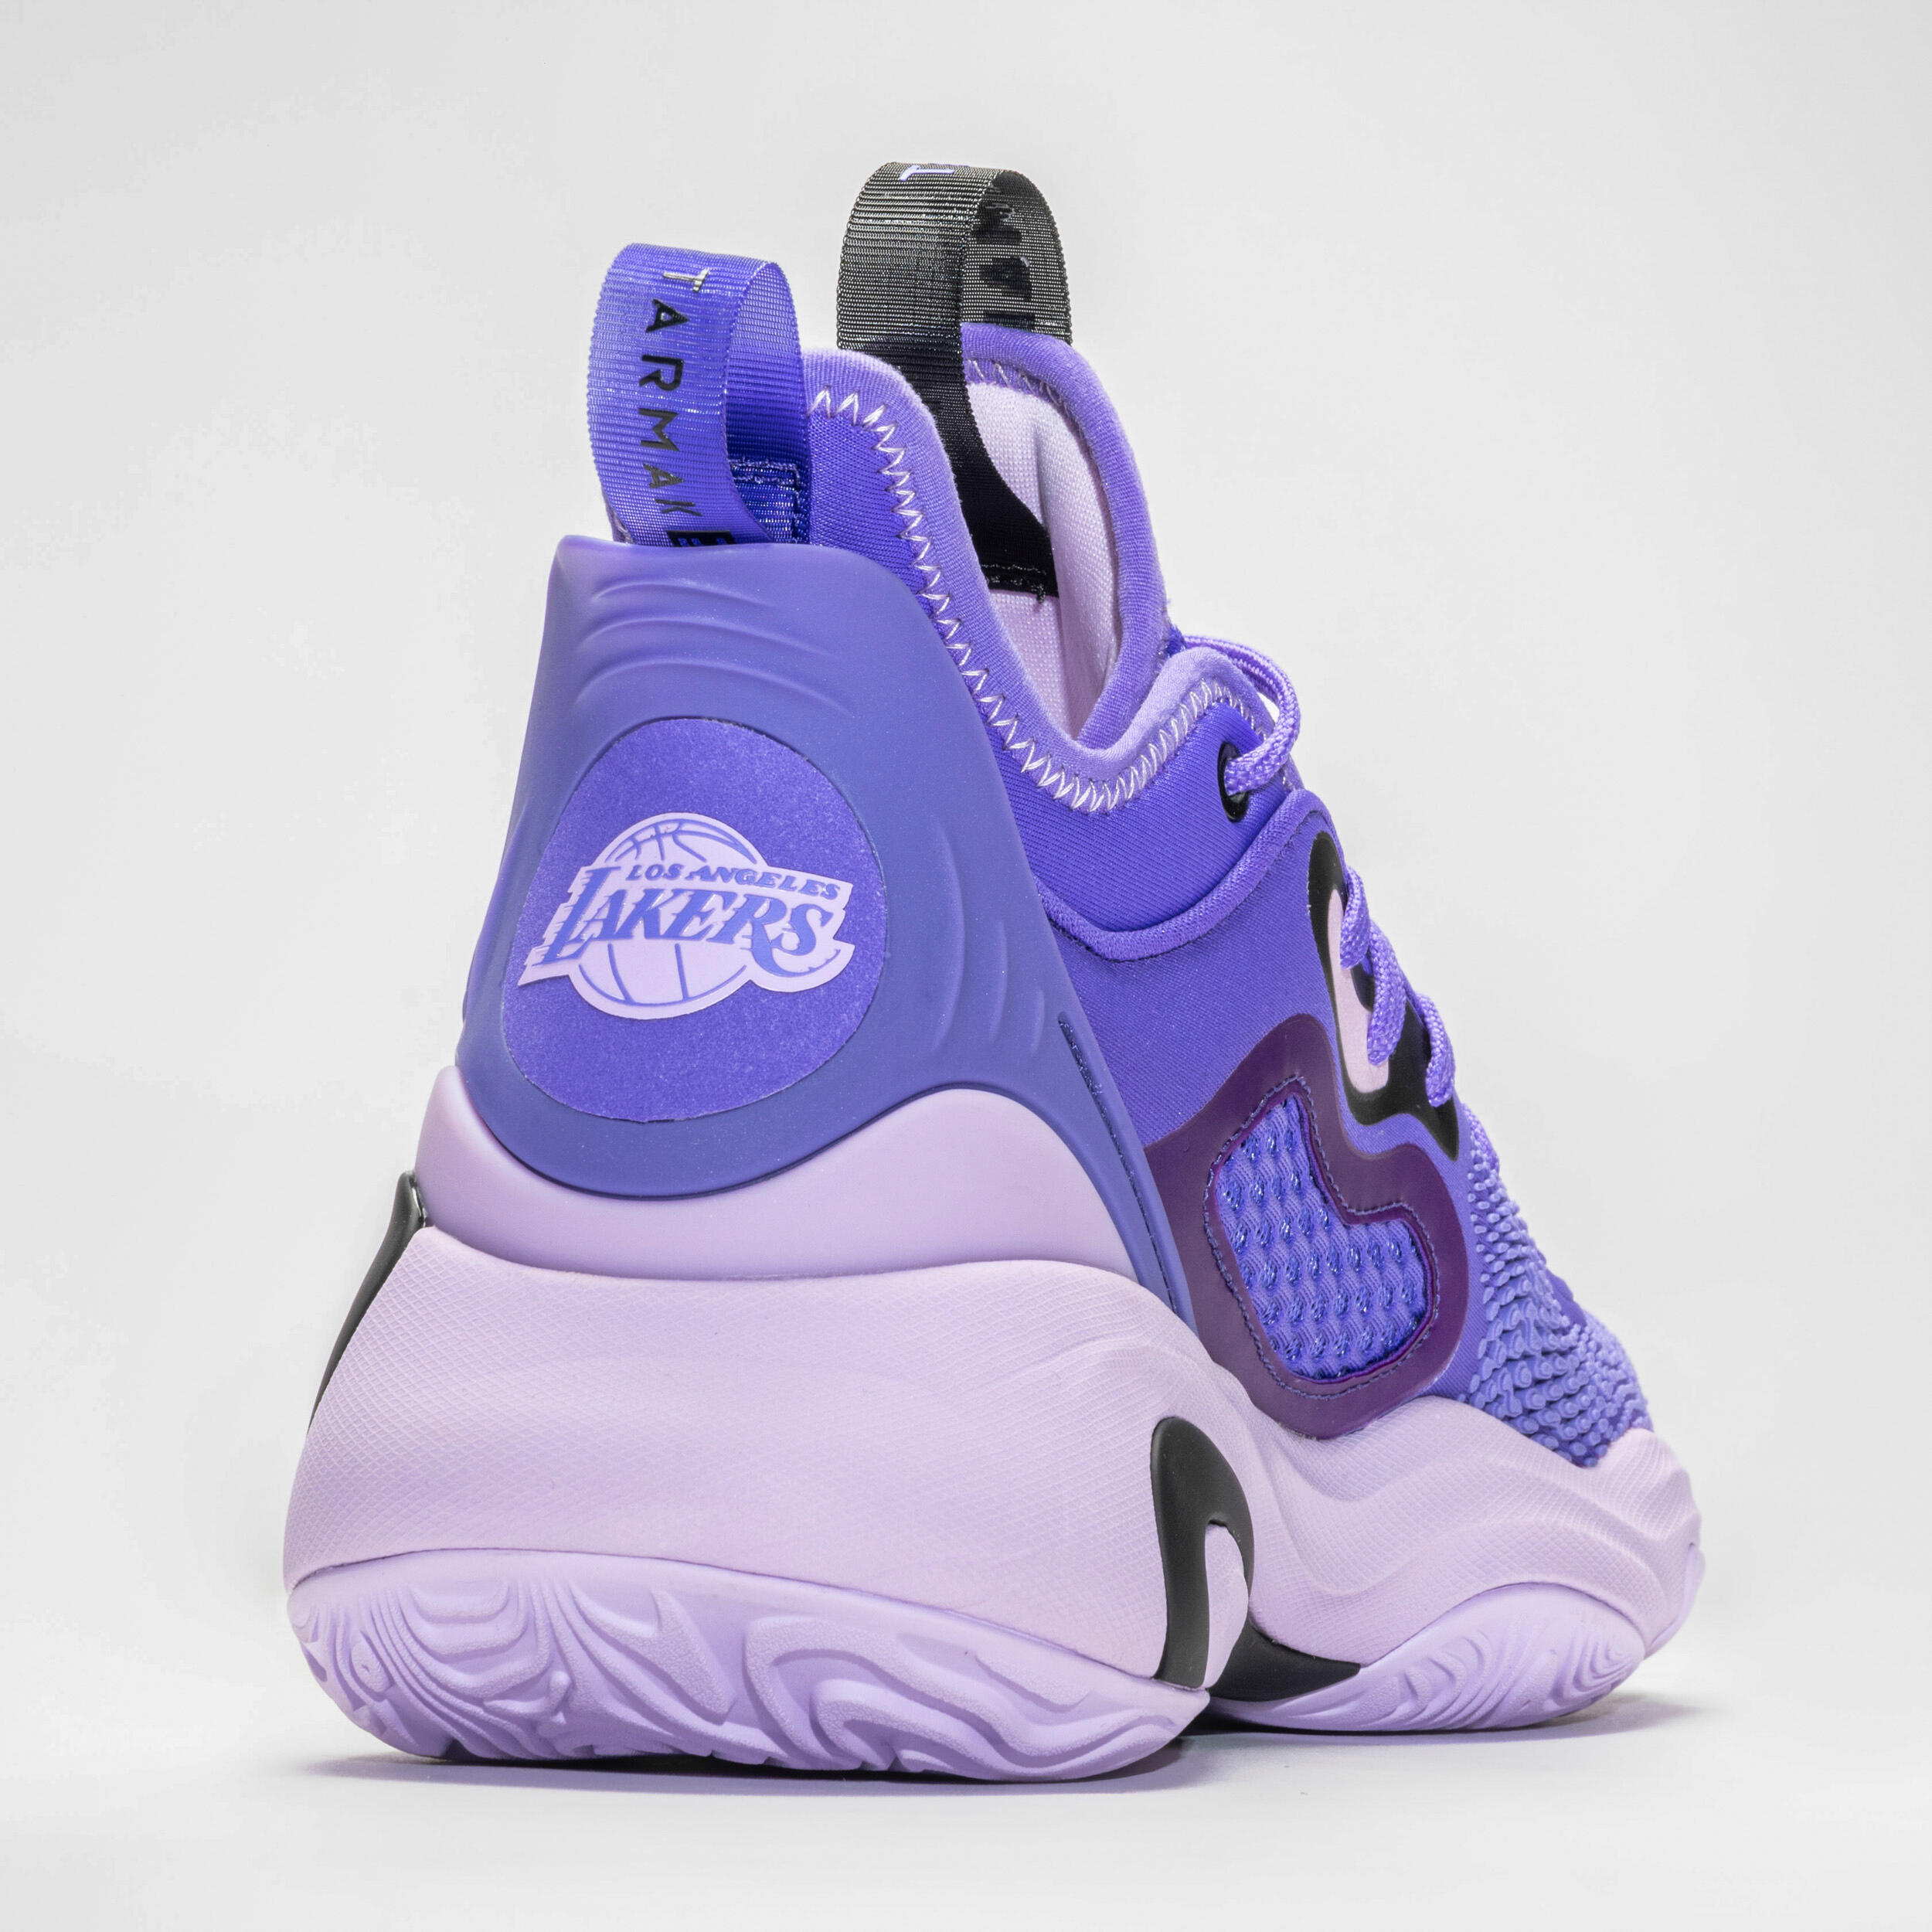 Men's/Women's Basketball Shoes SE900 - Purple/NBA Los Angeles Lakers 4/17